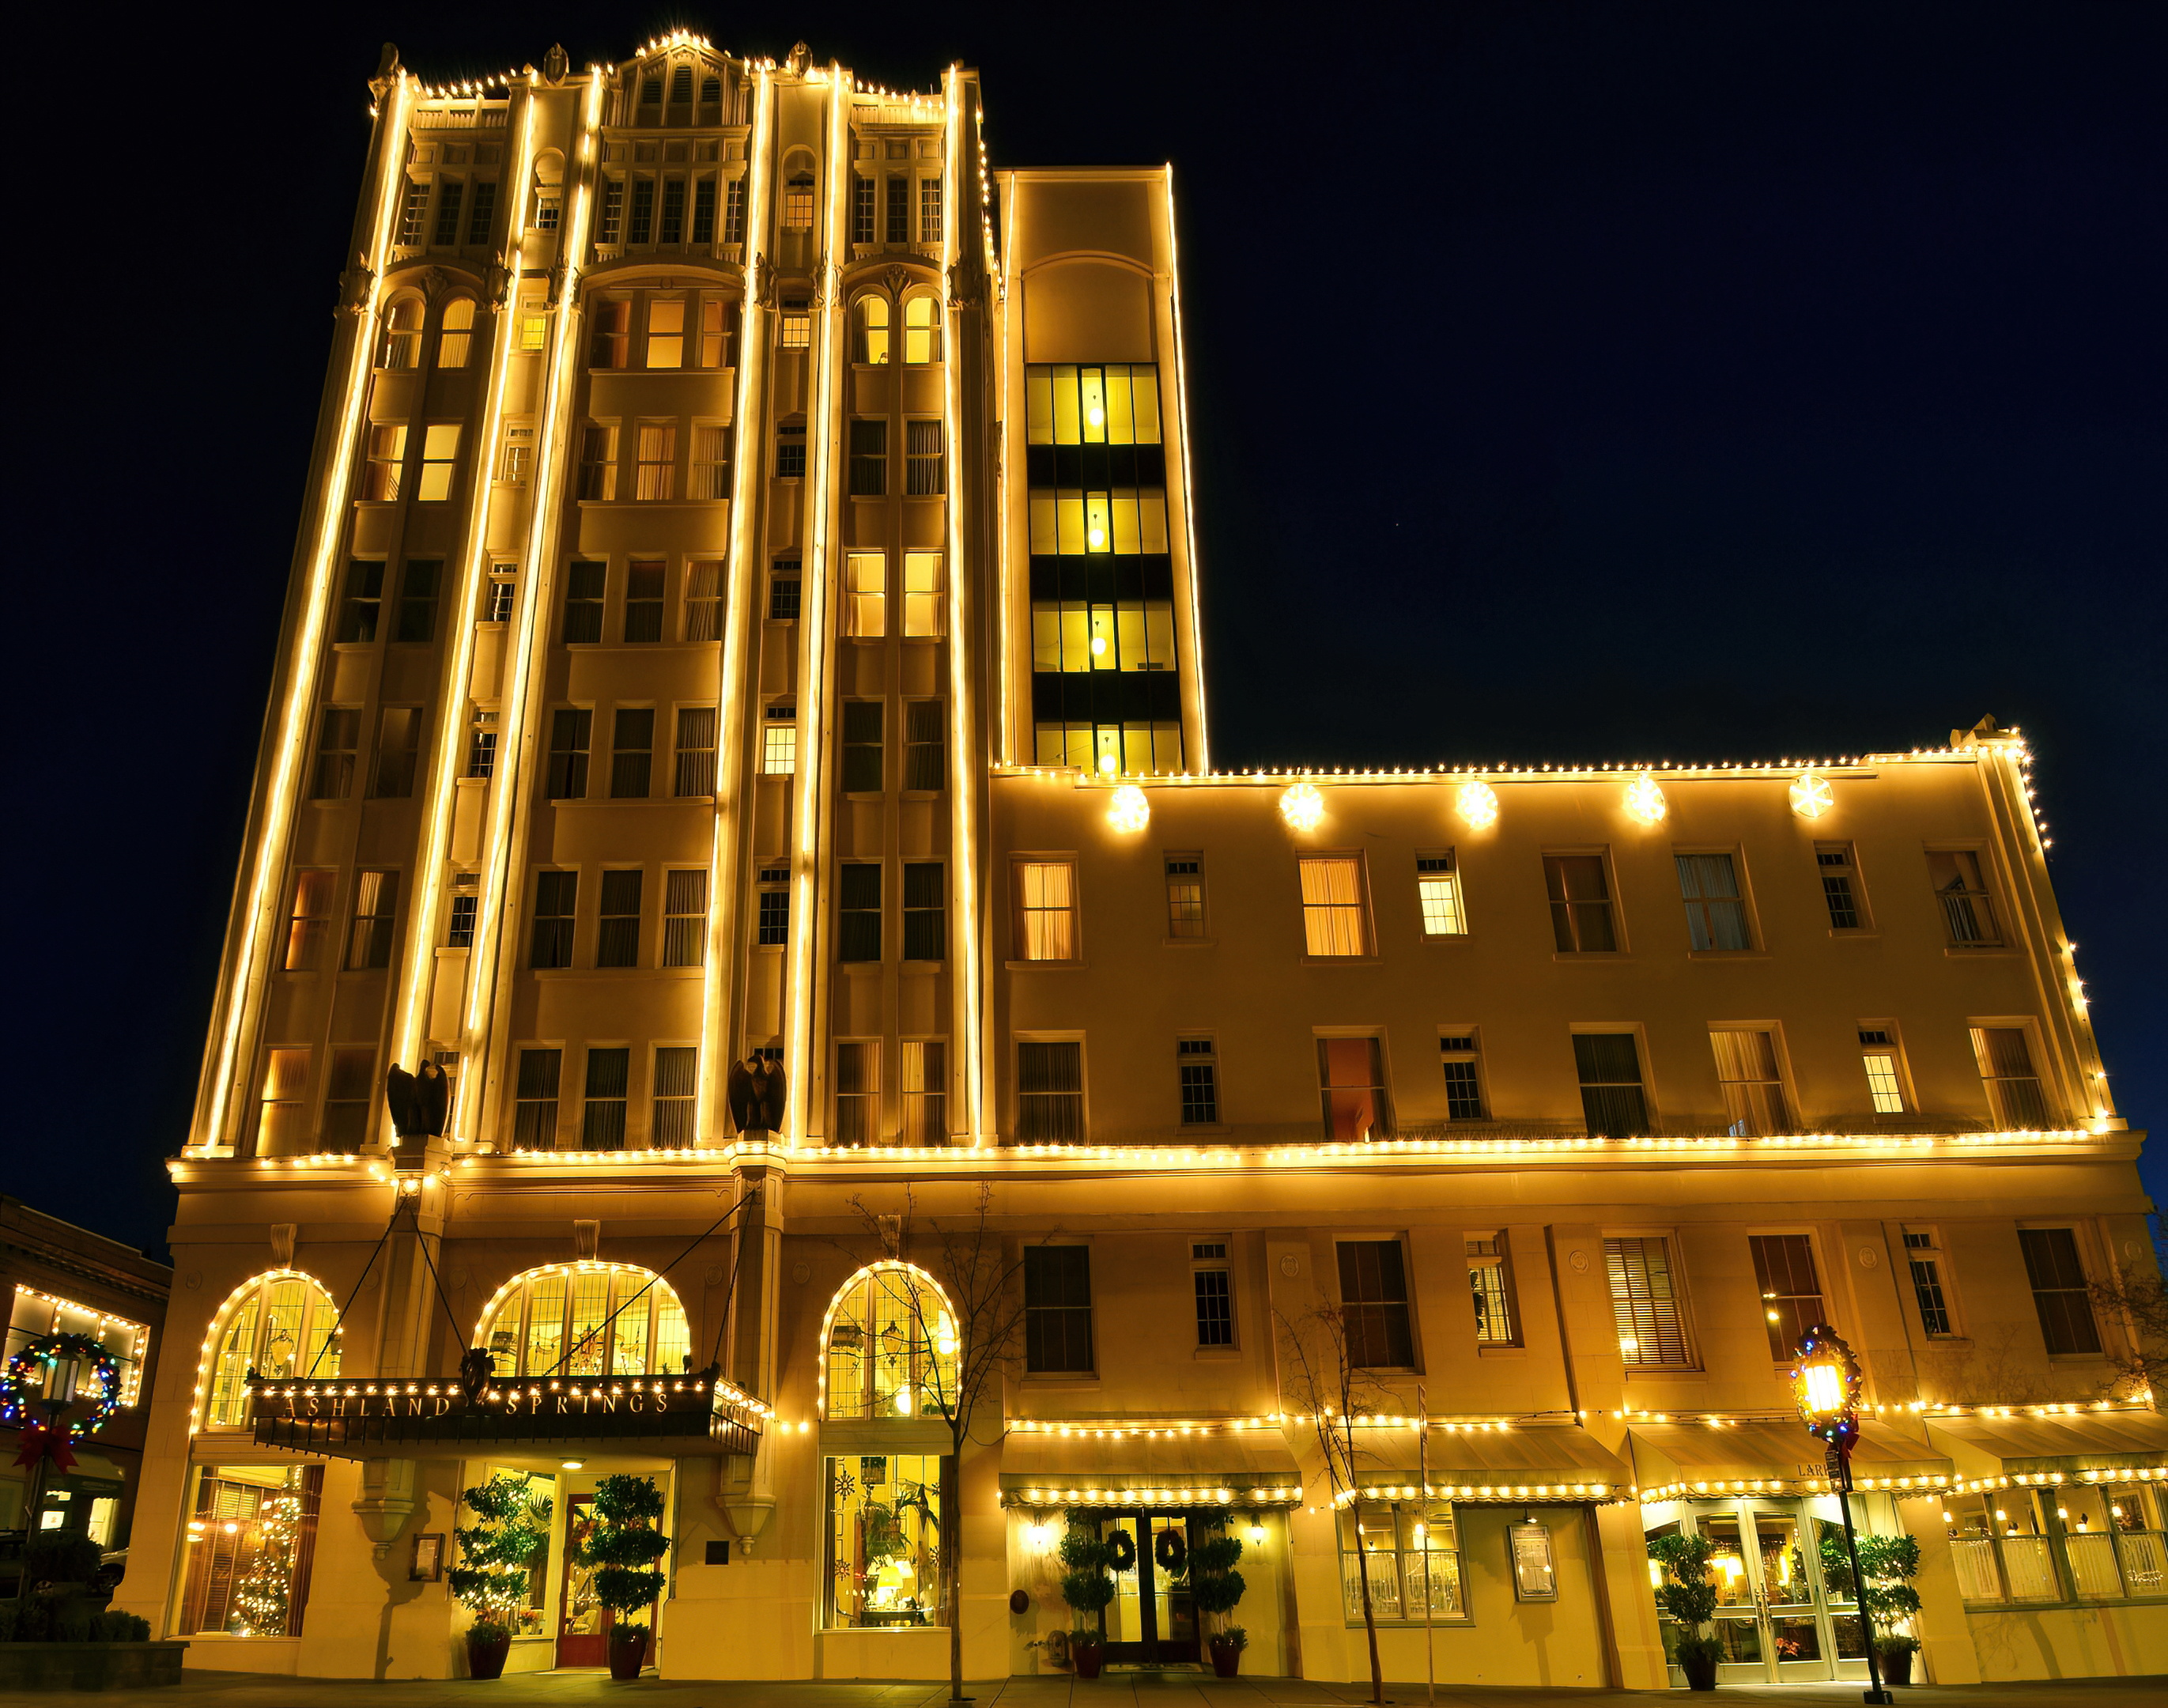 ashland springs hotel holiday lights topaz denoise ai-low-light